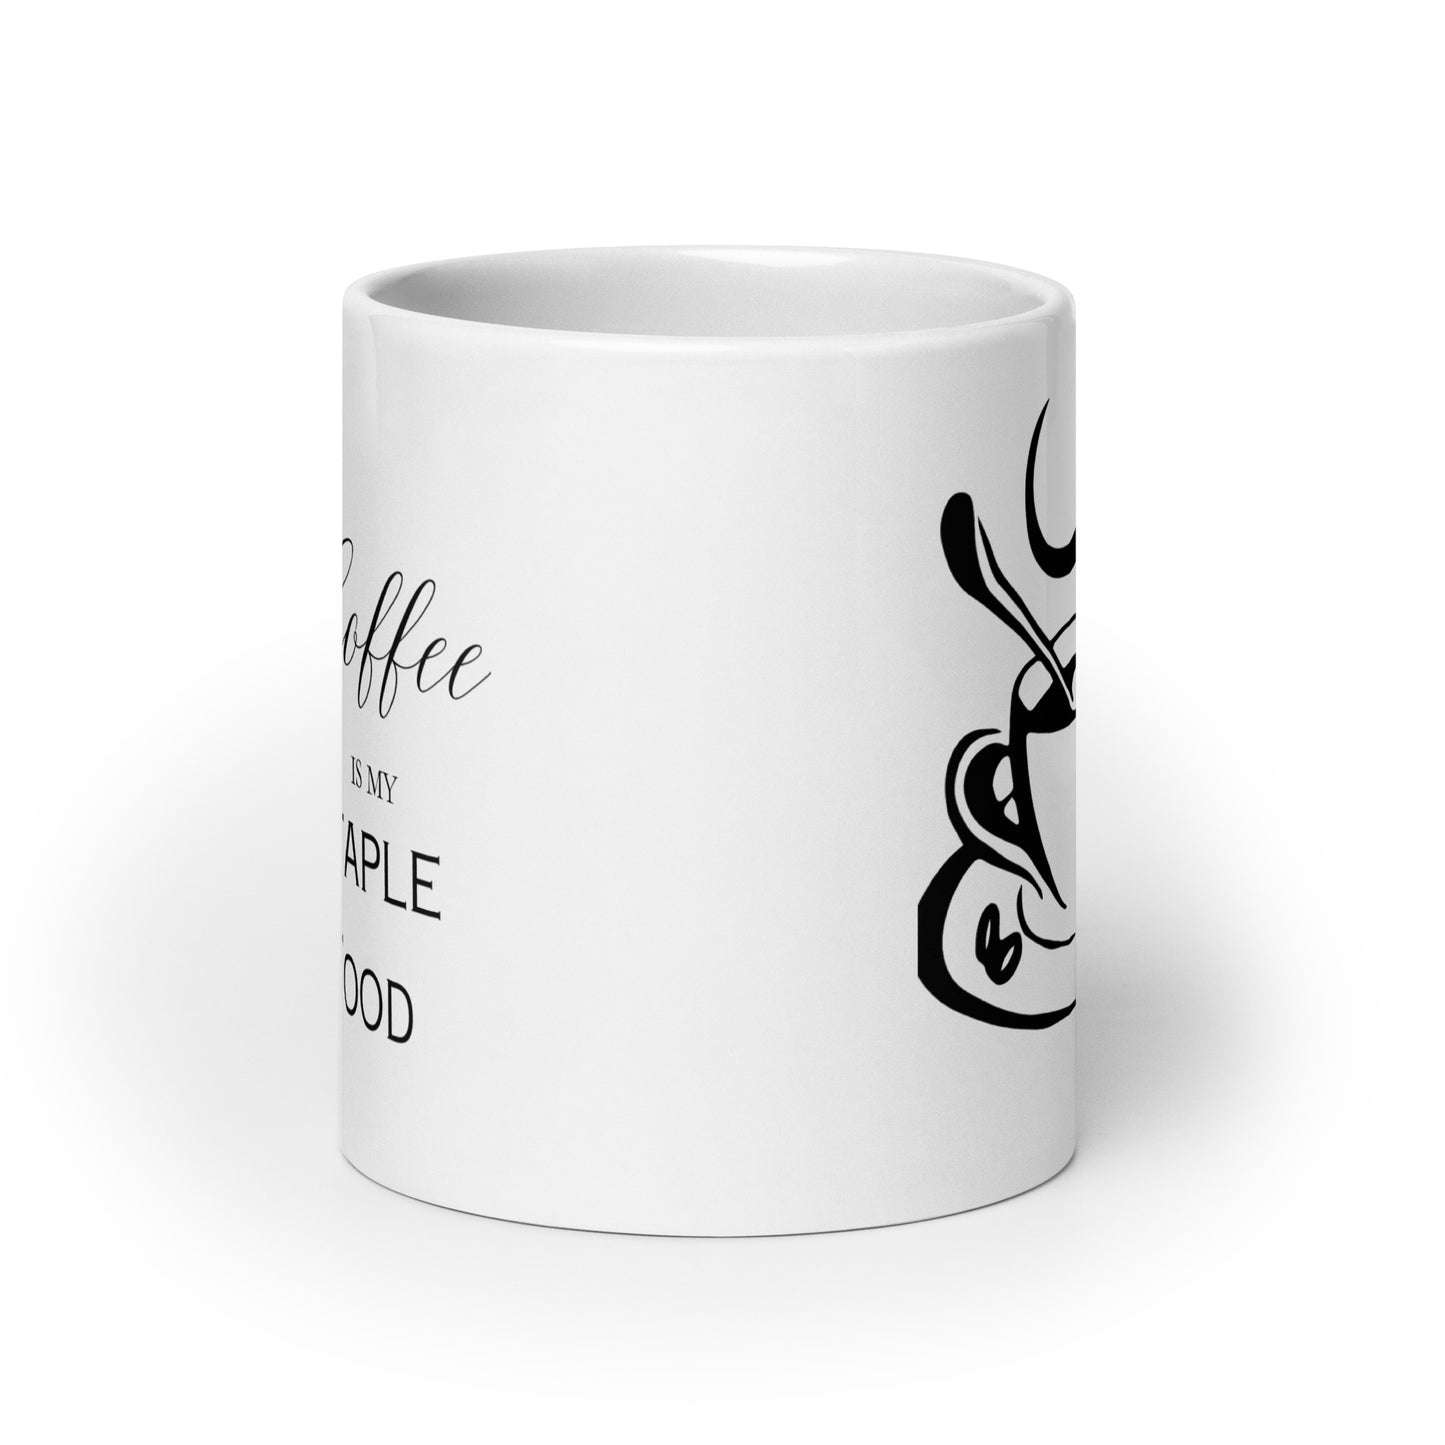 Coffee is my Staple Food Elegant White glossy mug